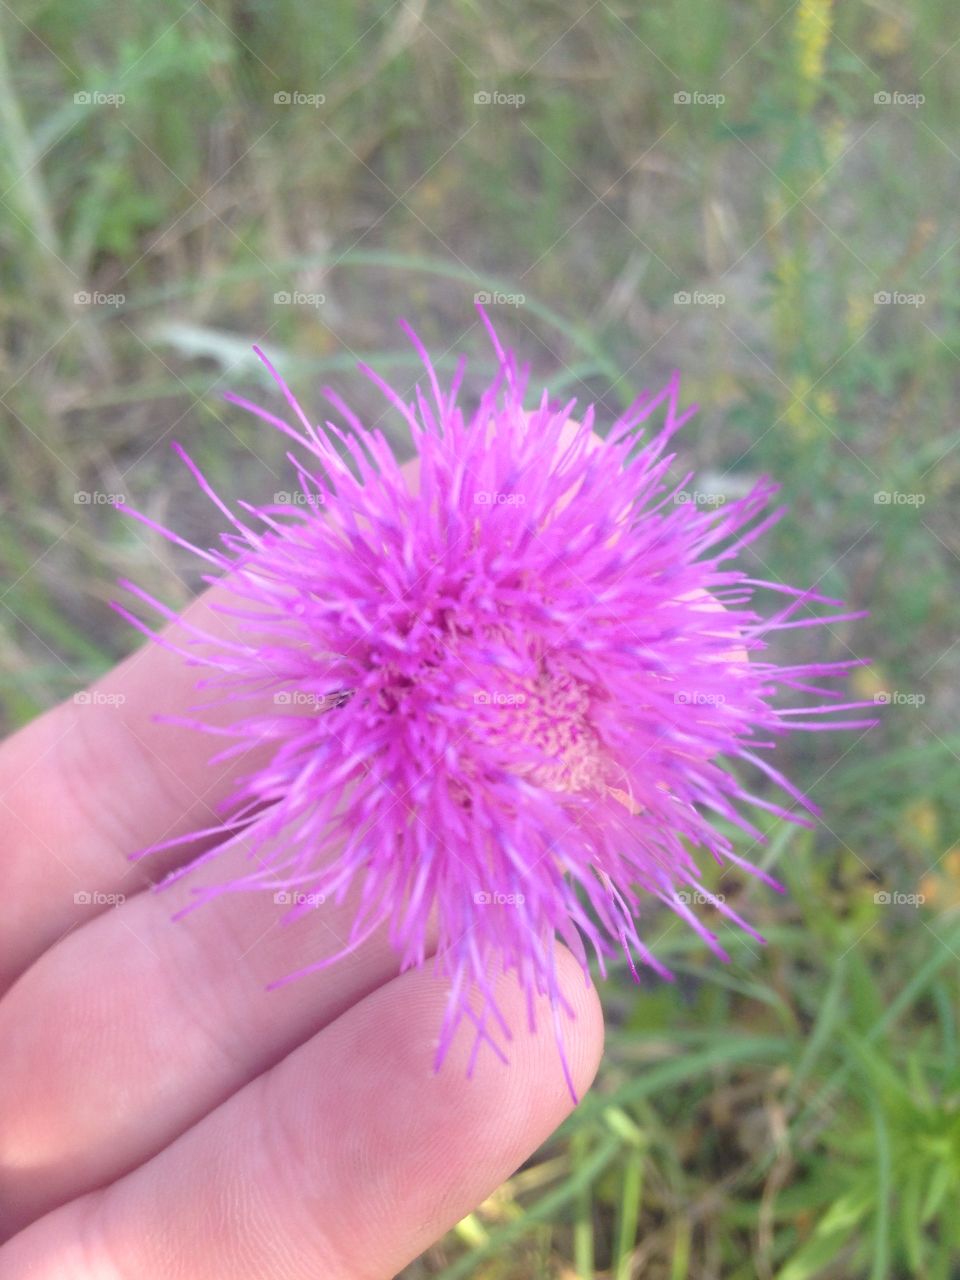 Purple knapp weed